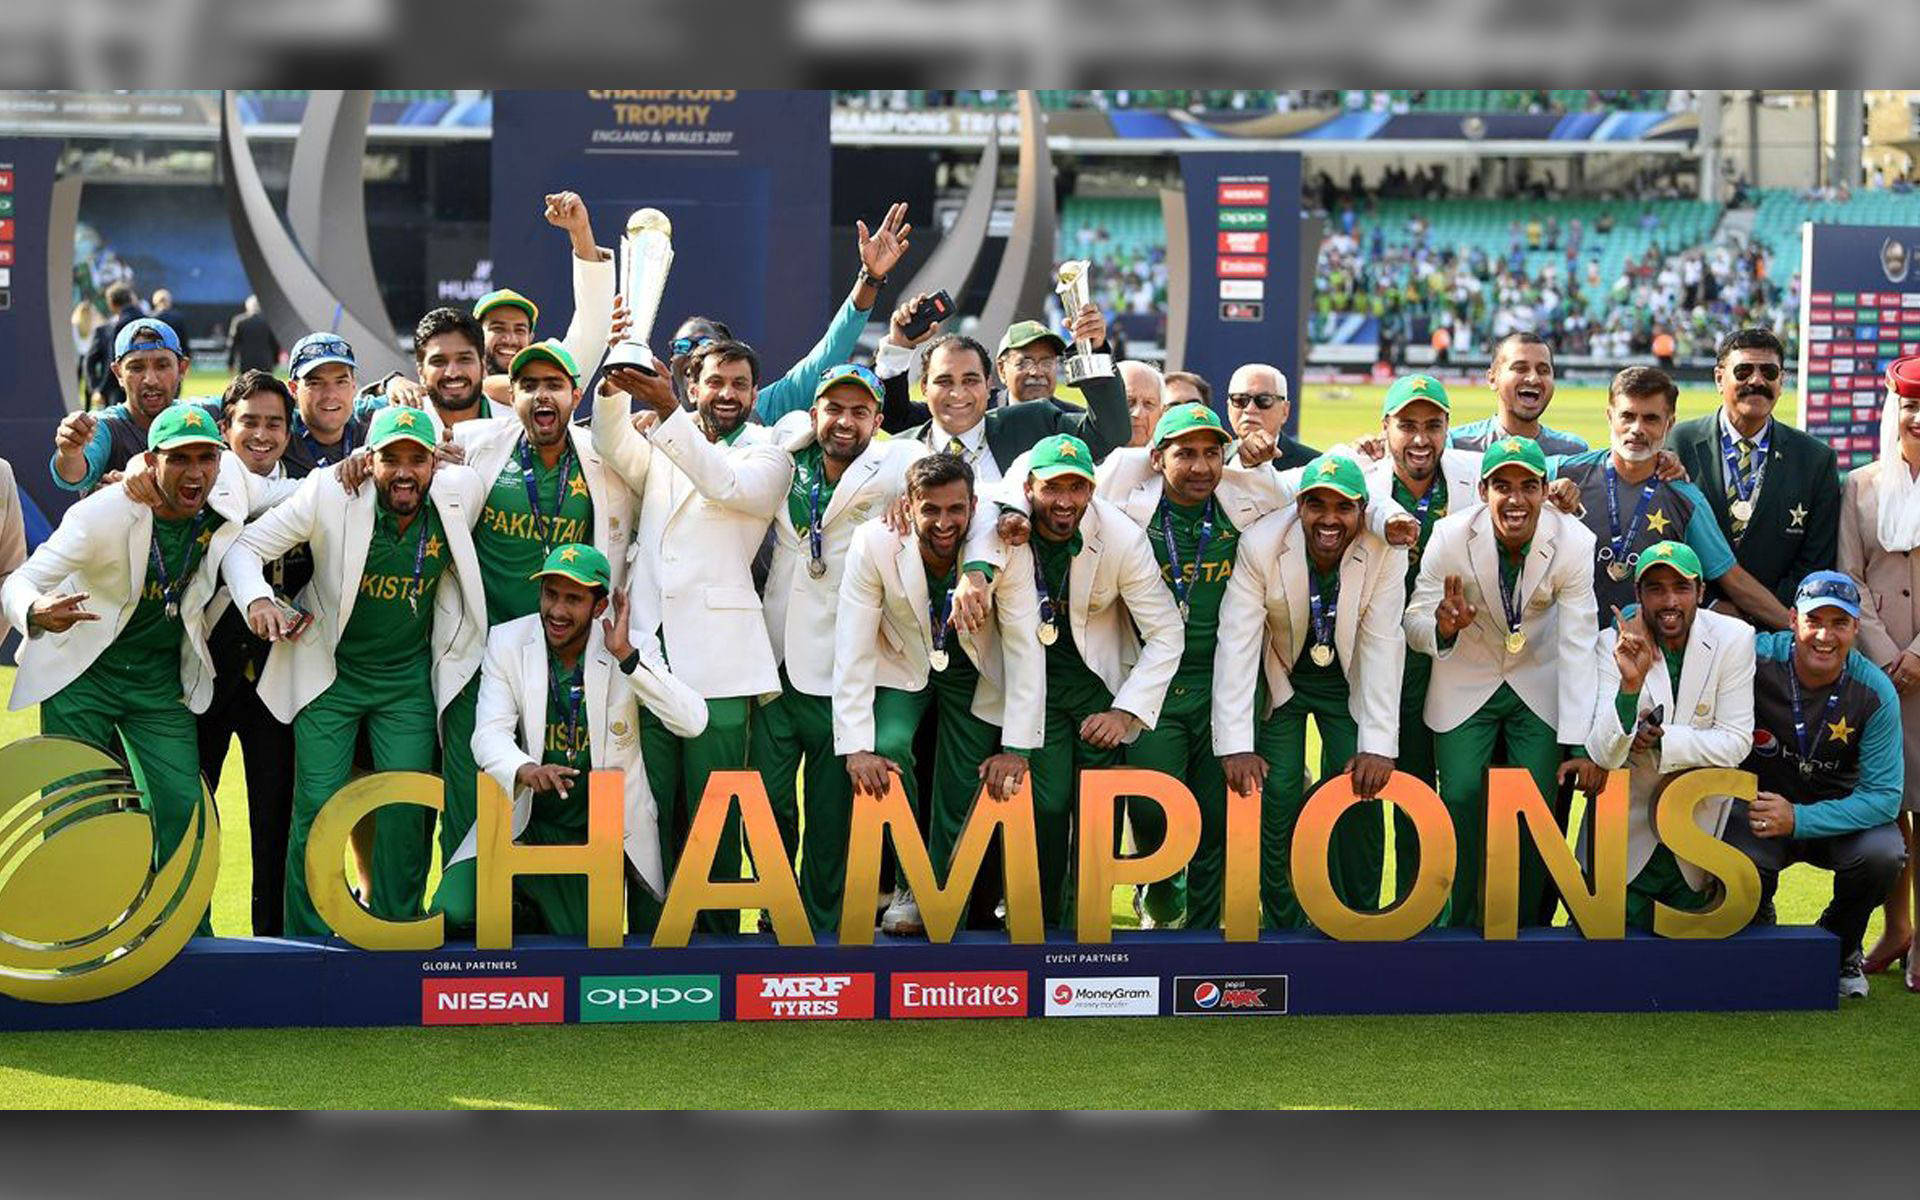 Campeonesde Cricket De Pakistán 2017 Fondo de pantalla